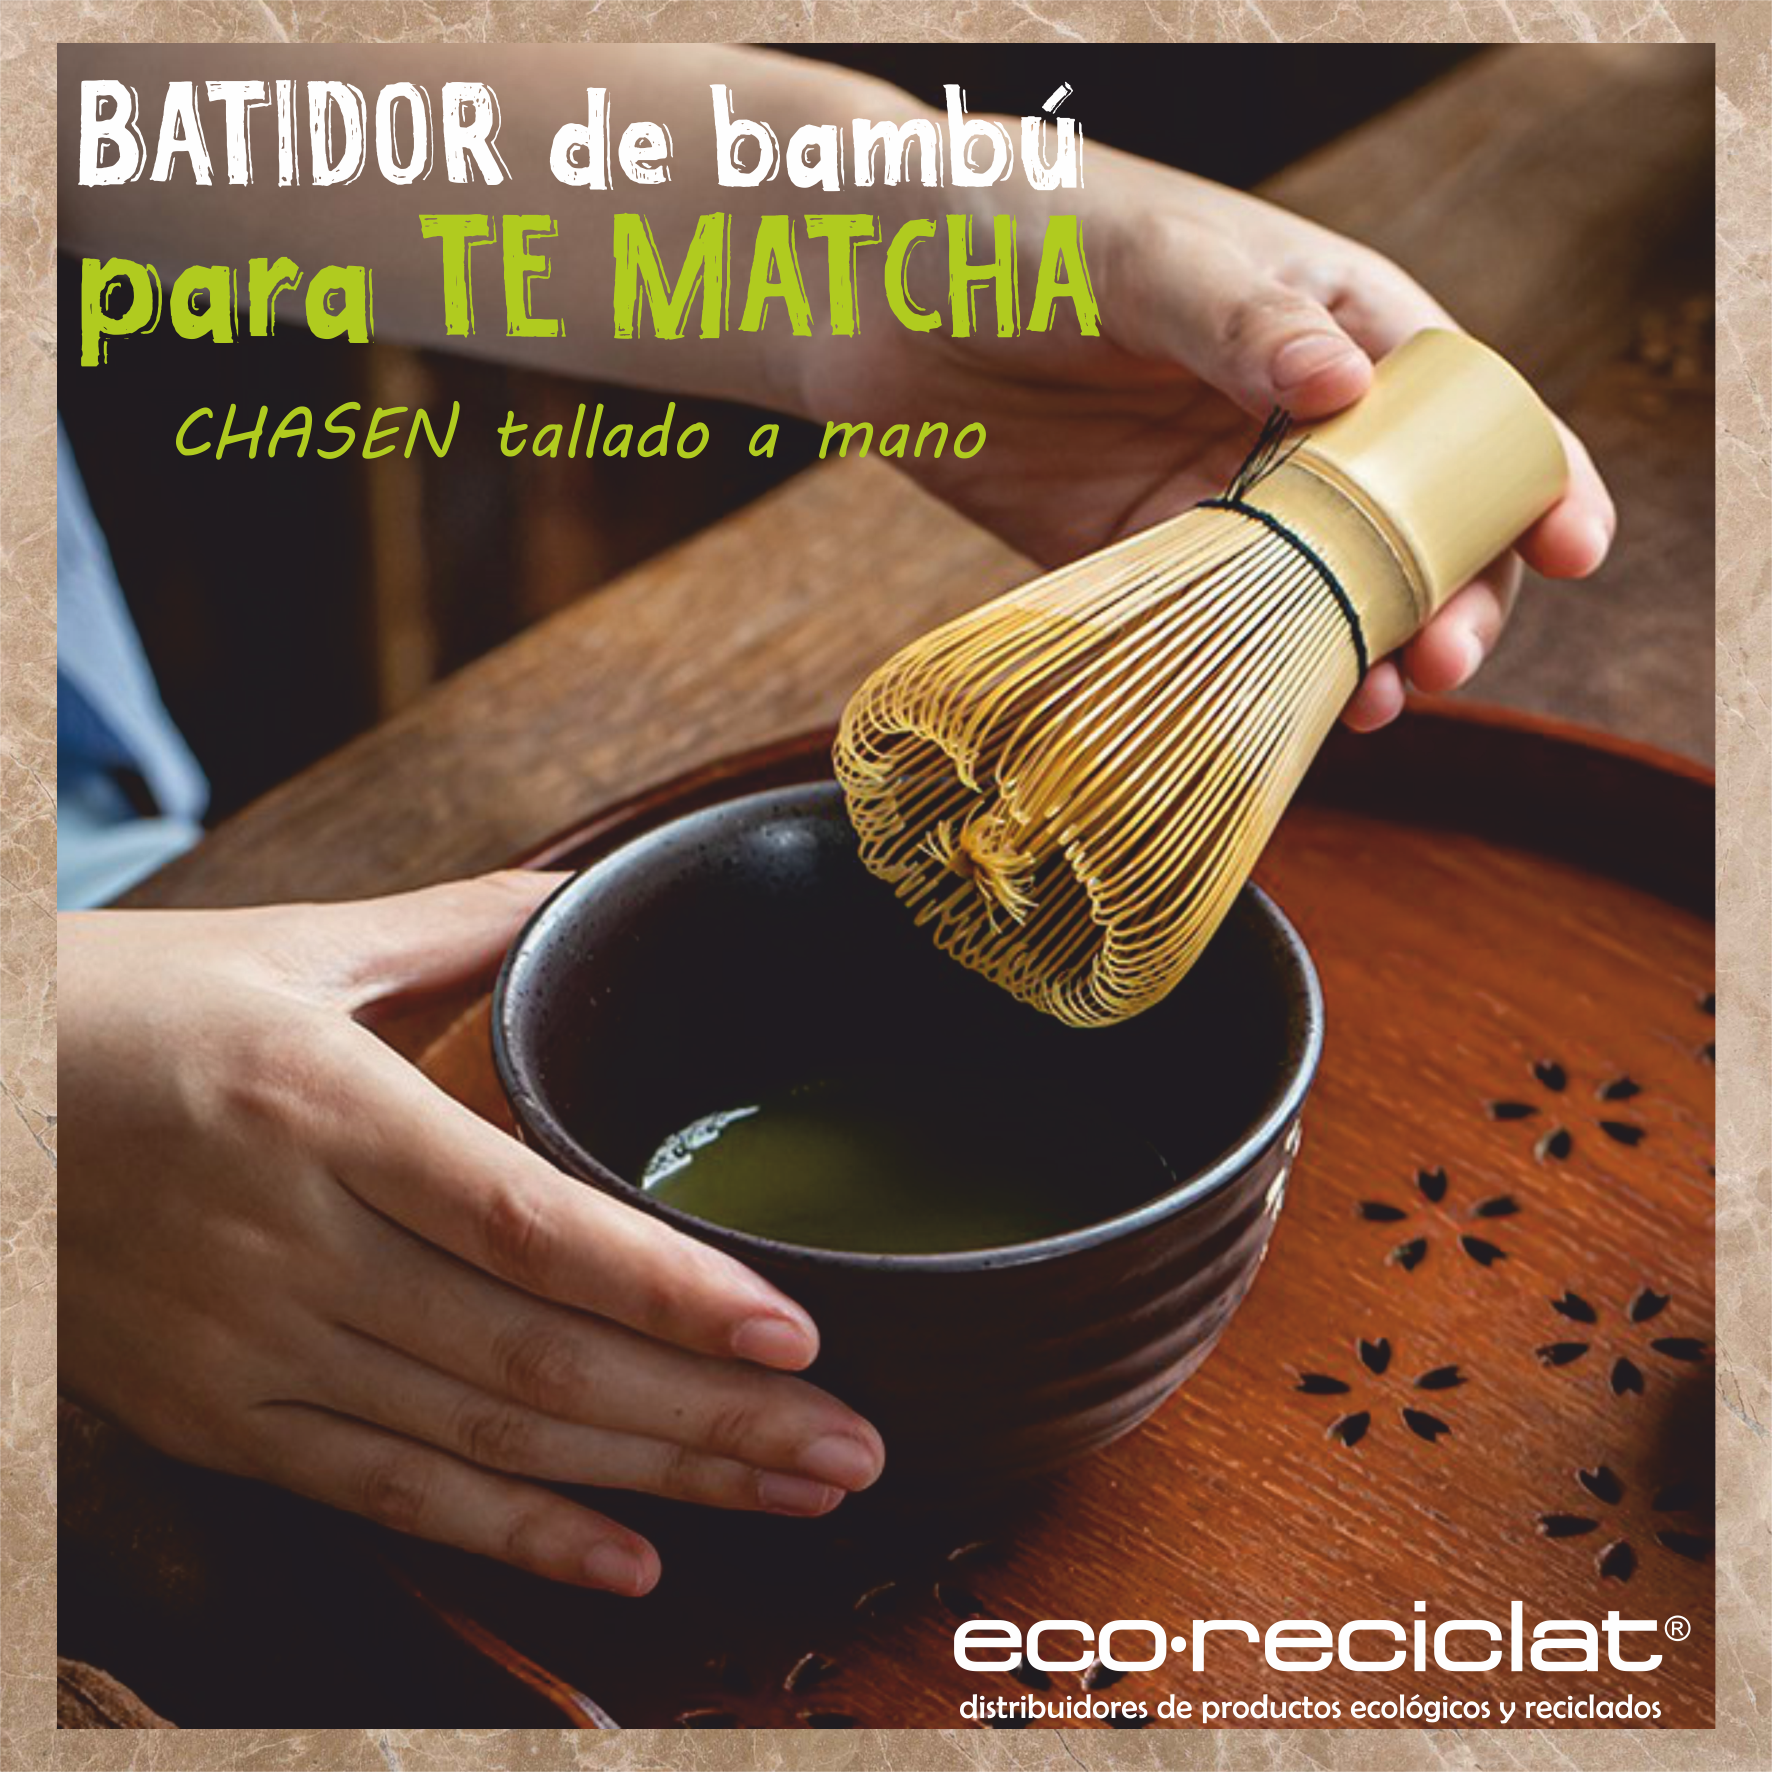 COMPLEMENTOS PARA TE MATCHA: BATIDOR de bambú artesano - Eco·Reciclat